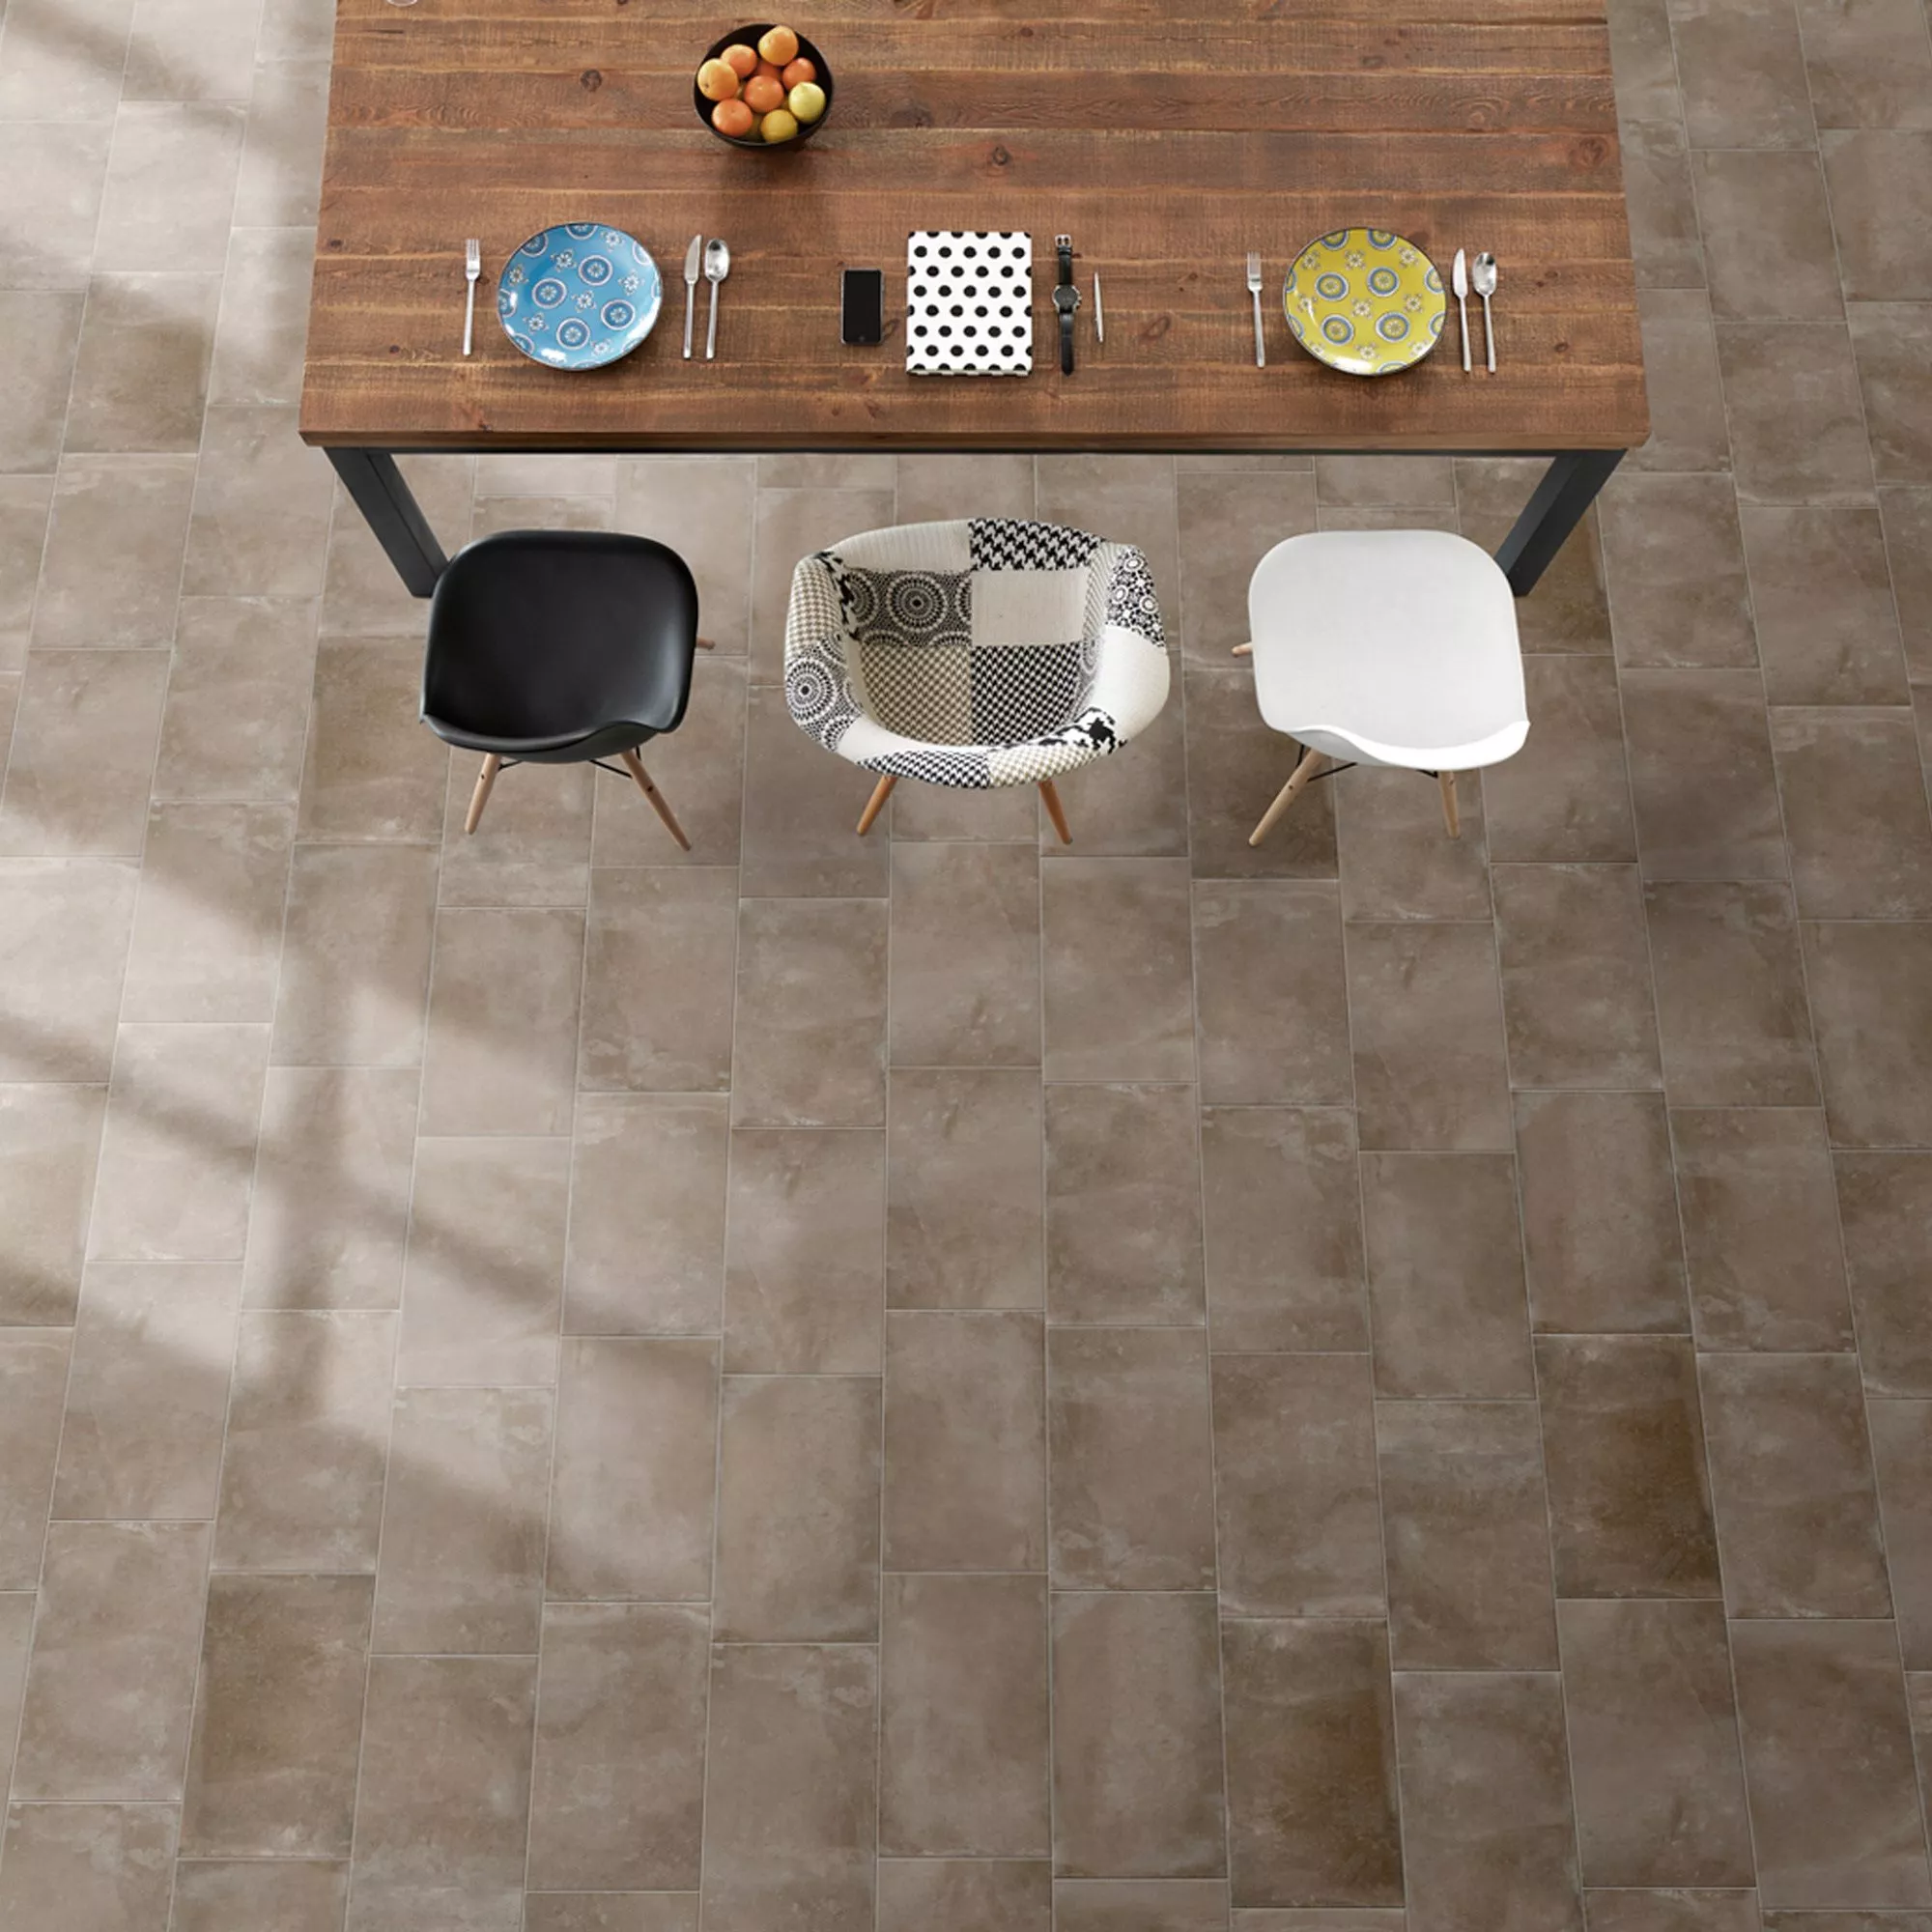 Sample Floor Tiles Cement Optic Maryland Brown 30x60cm